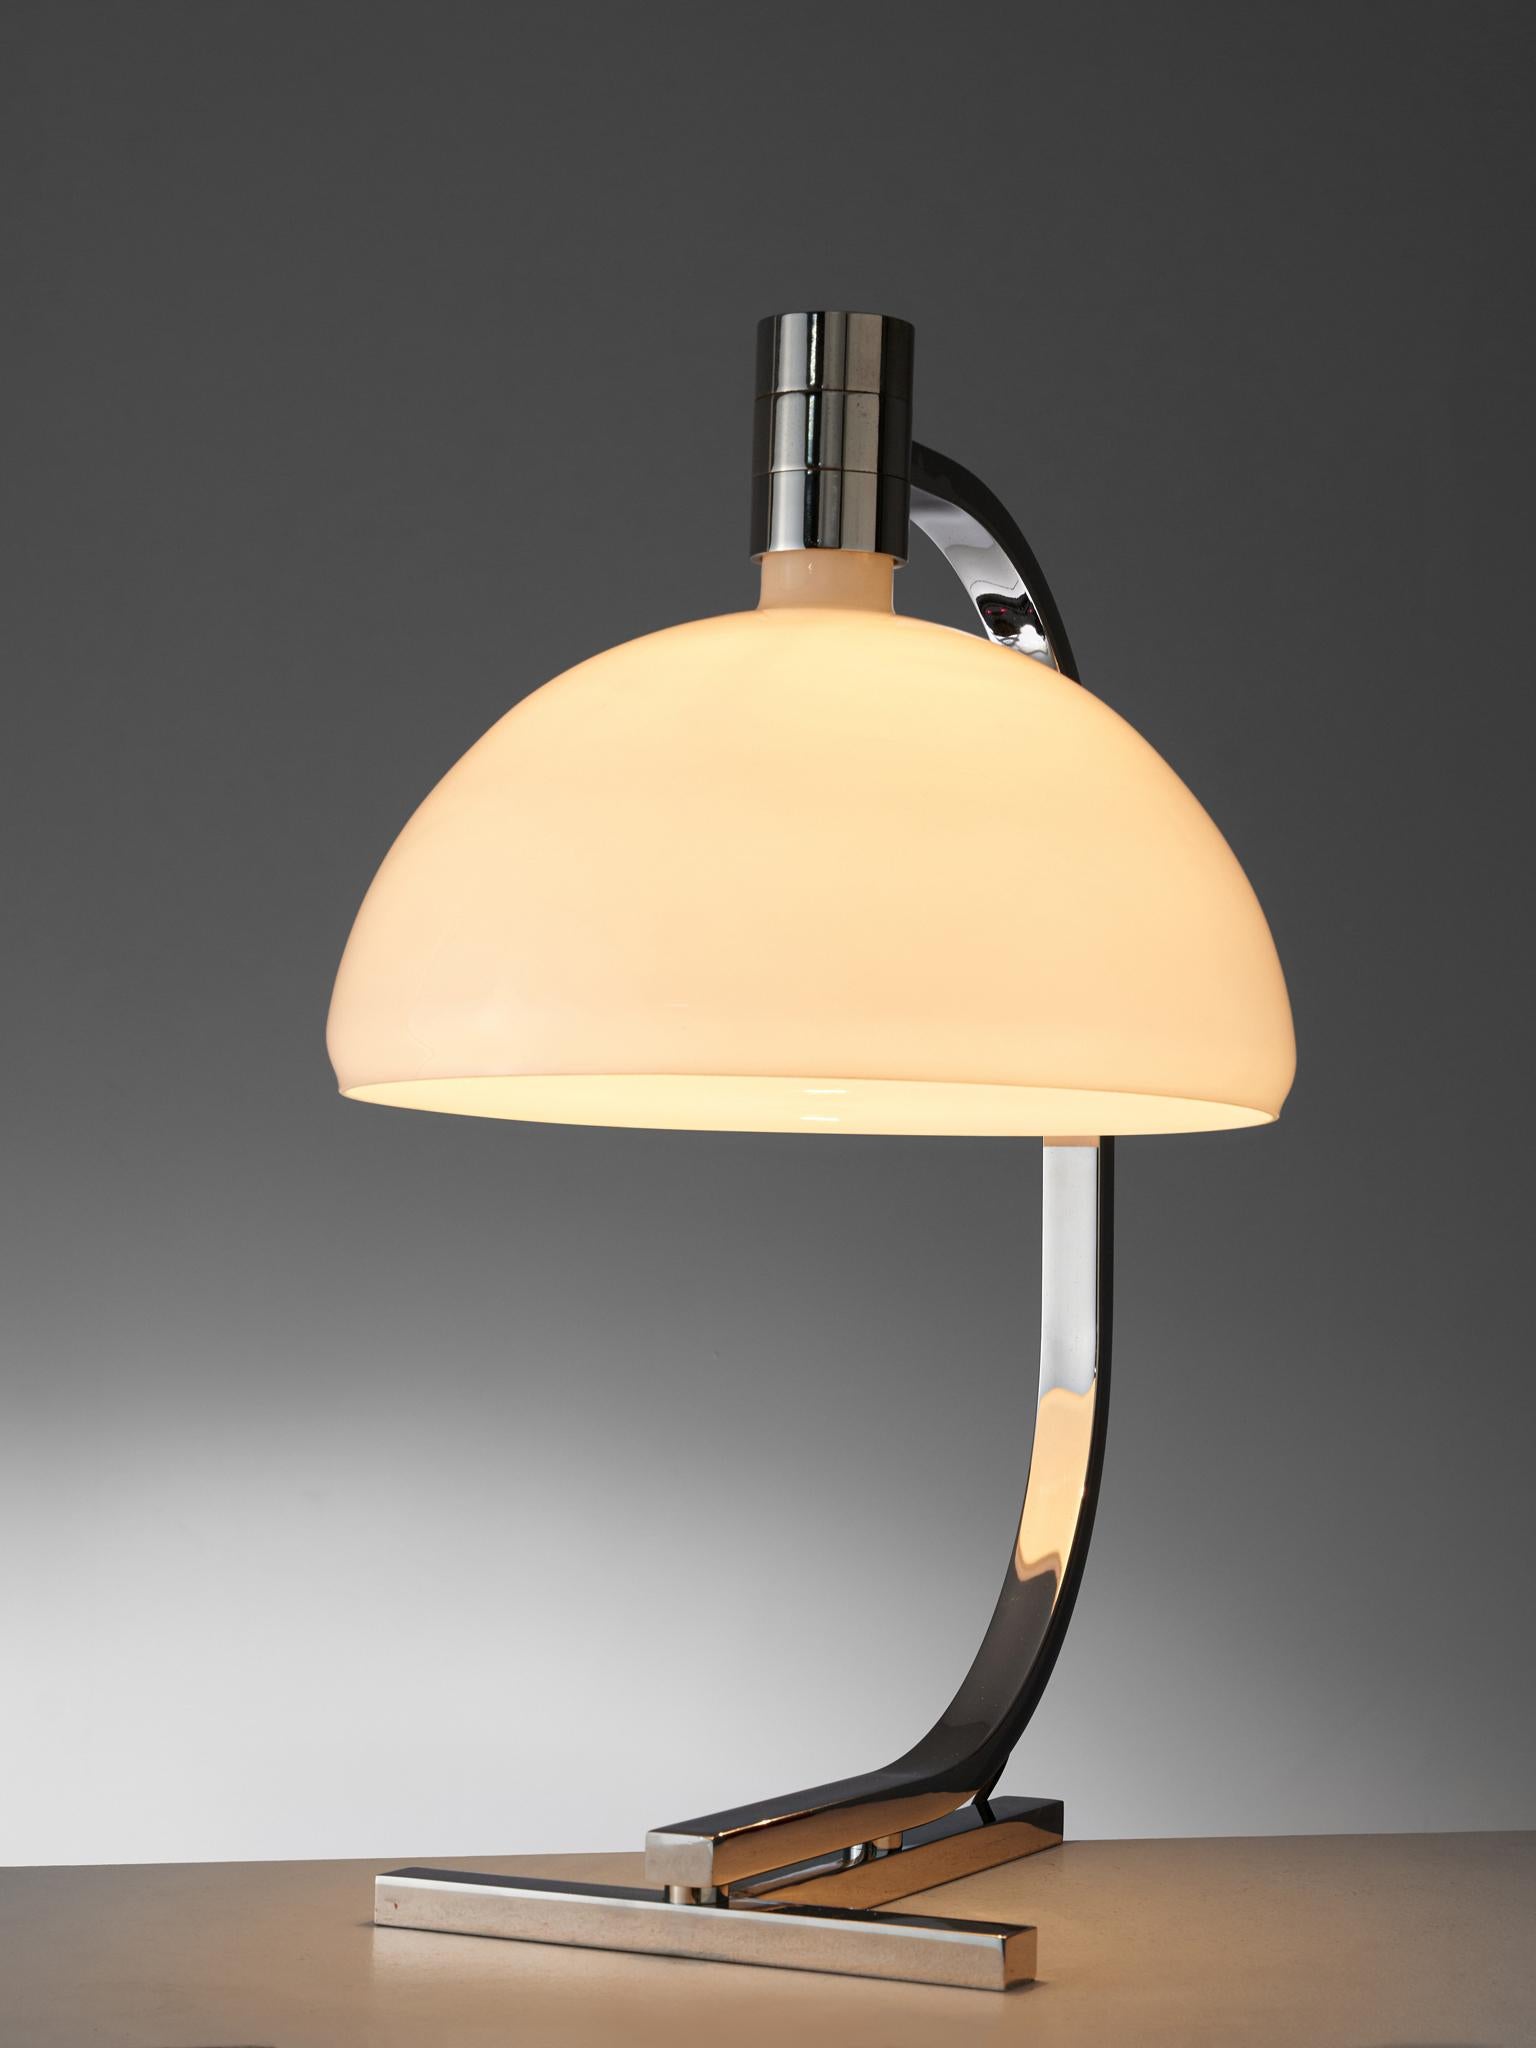 vintage fiberglass lamp shade